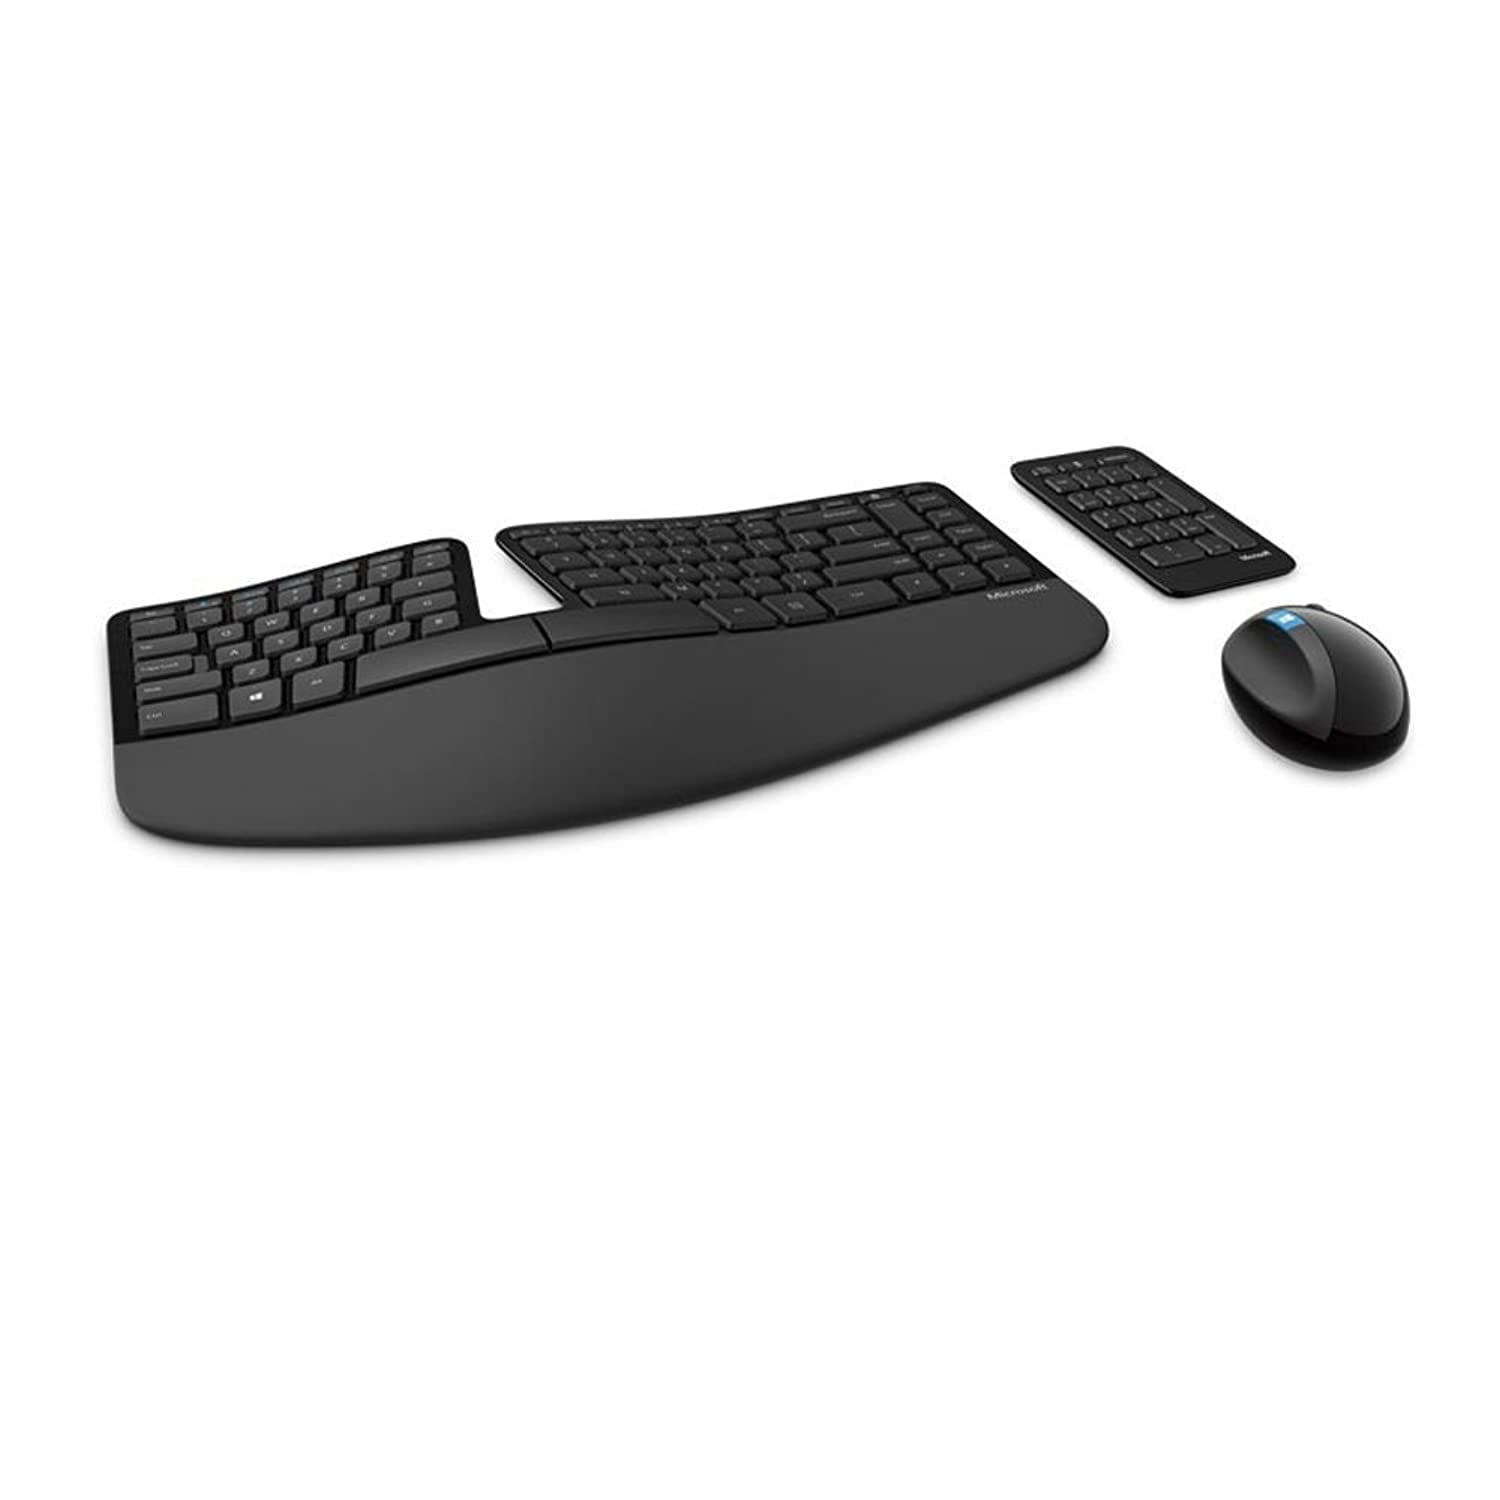 Microsoft Sculpt Ergonomic Wireless Desktop Keyboard and Mouse (L5V